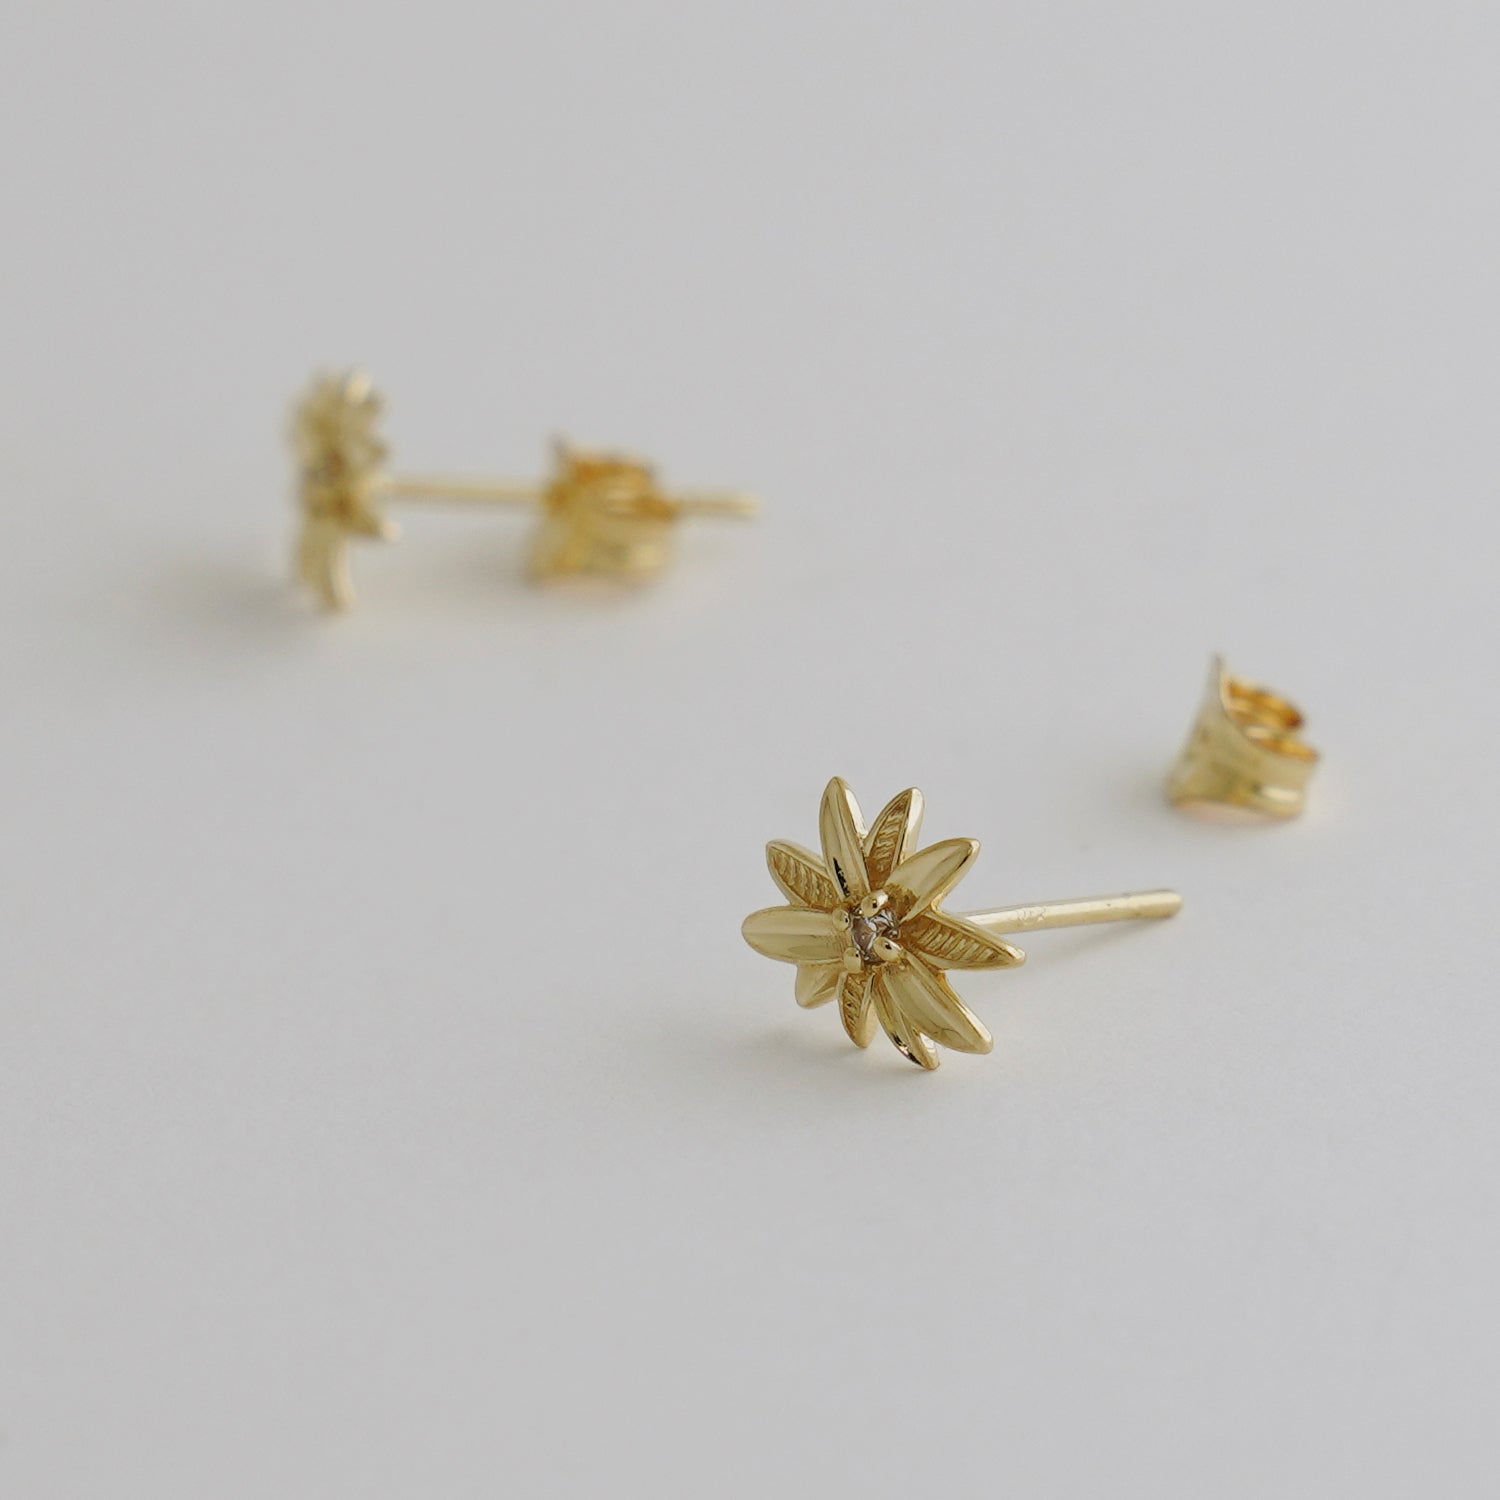 Get 14K Solid Gold Cubic Zirconia Flower Stud Earrings